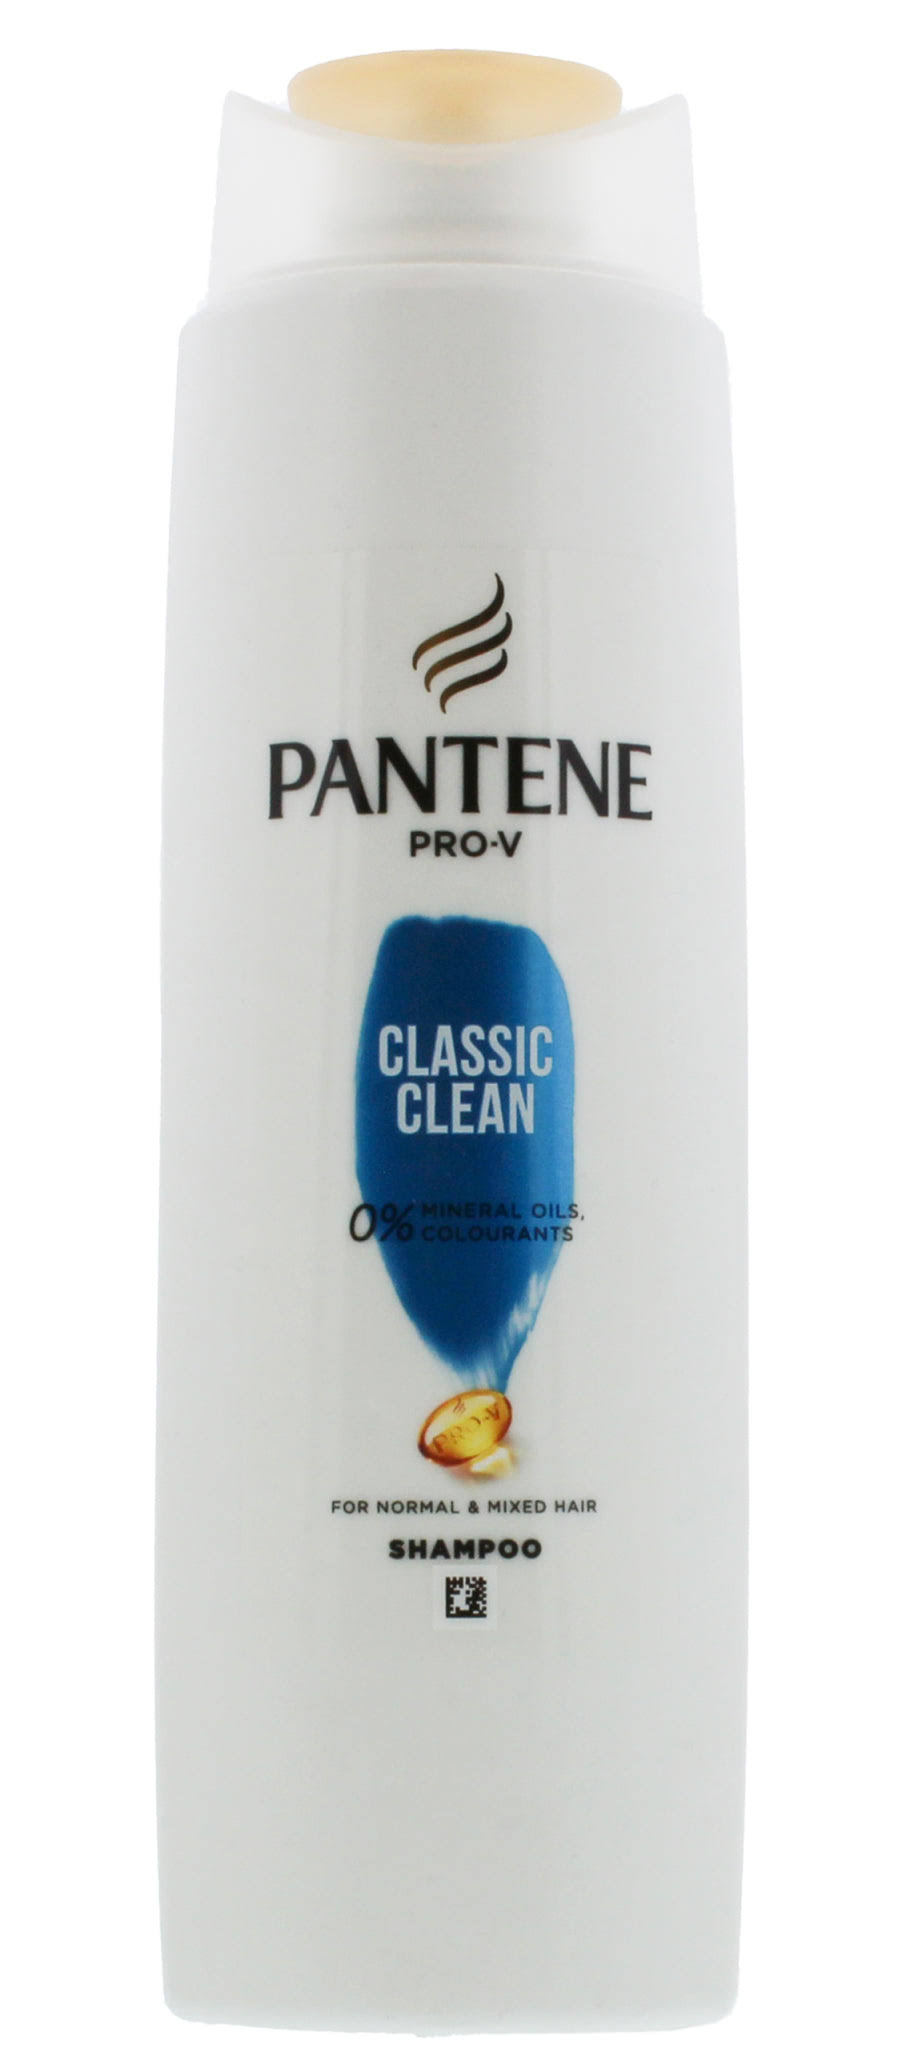 Pantene Classic Clean Shampoo - 270ml